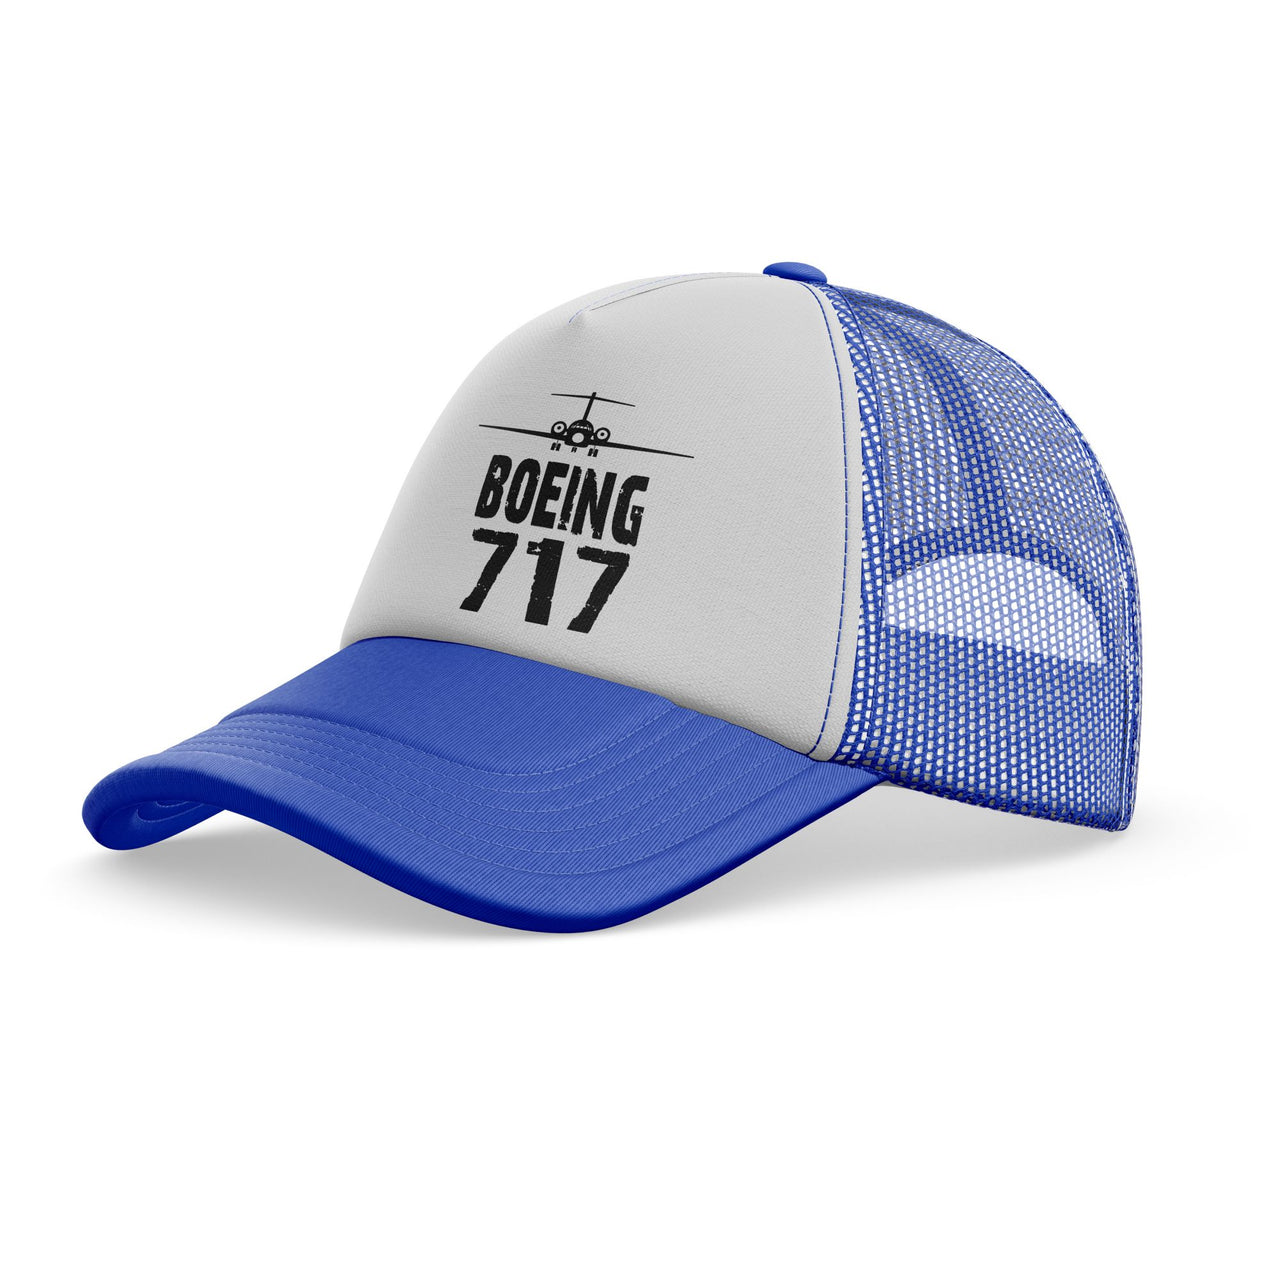 Boeing 717 & Plane Designed Trucker Caps & Hats